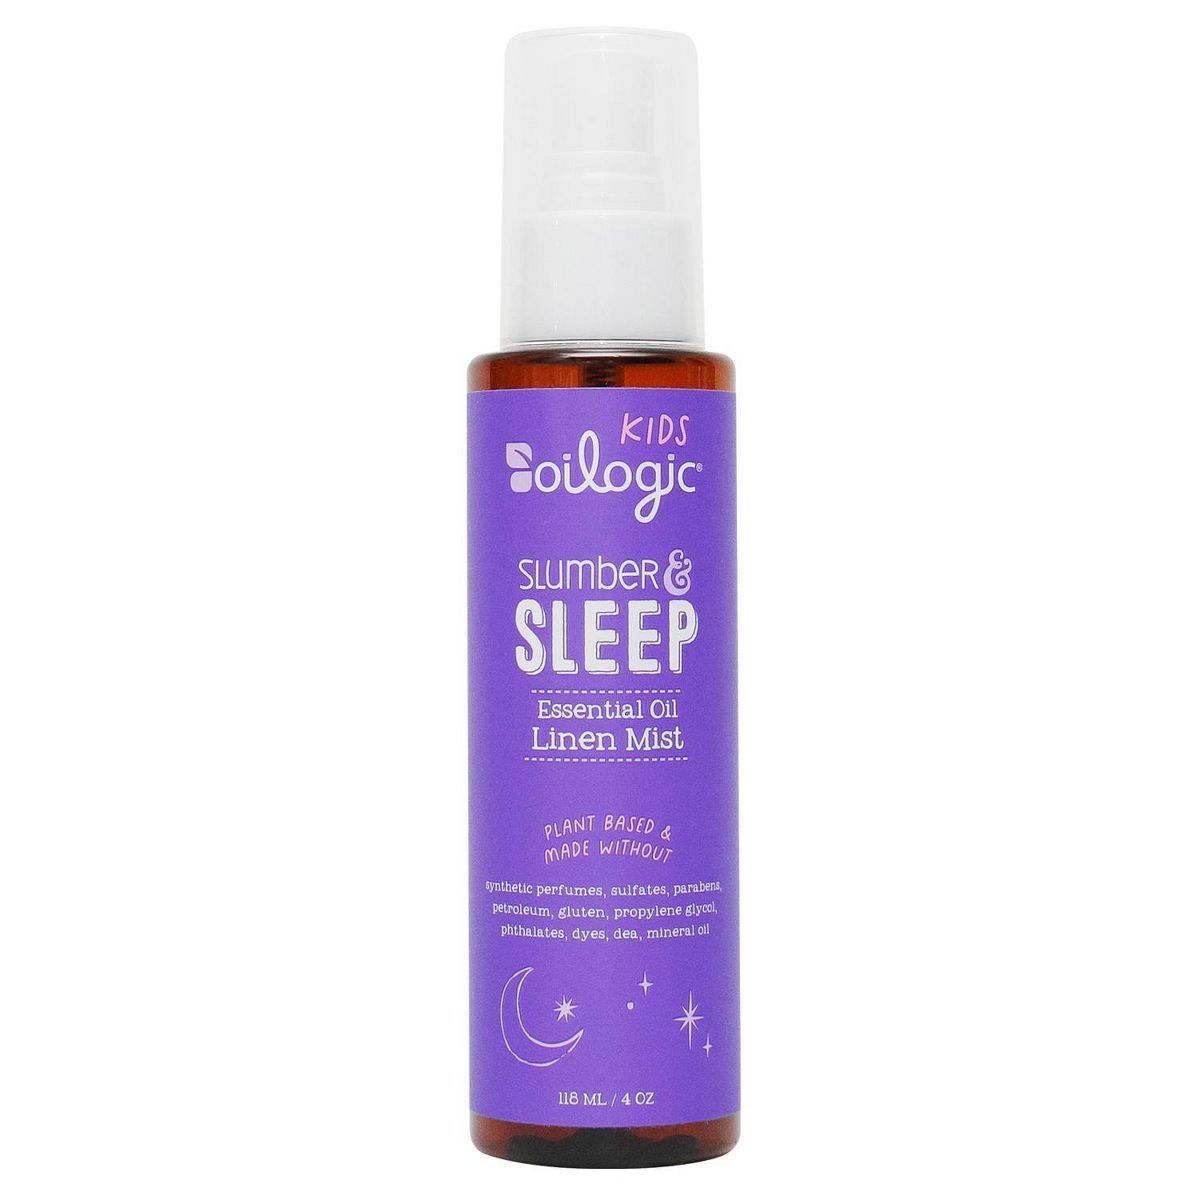 Oilogic Kids' Slumber & Sleep Essential Oil - Linen Mist - 4 fl oz | Target